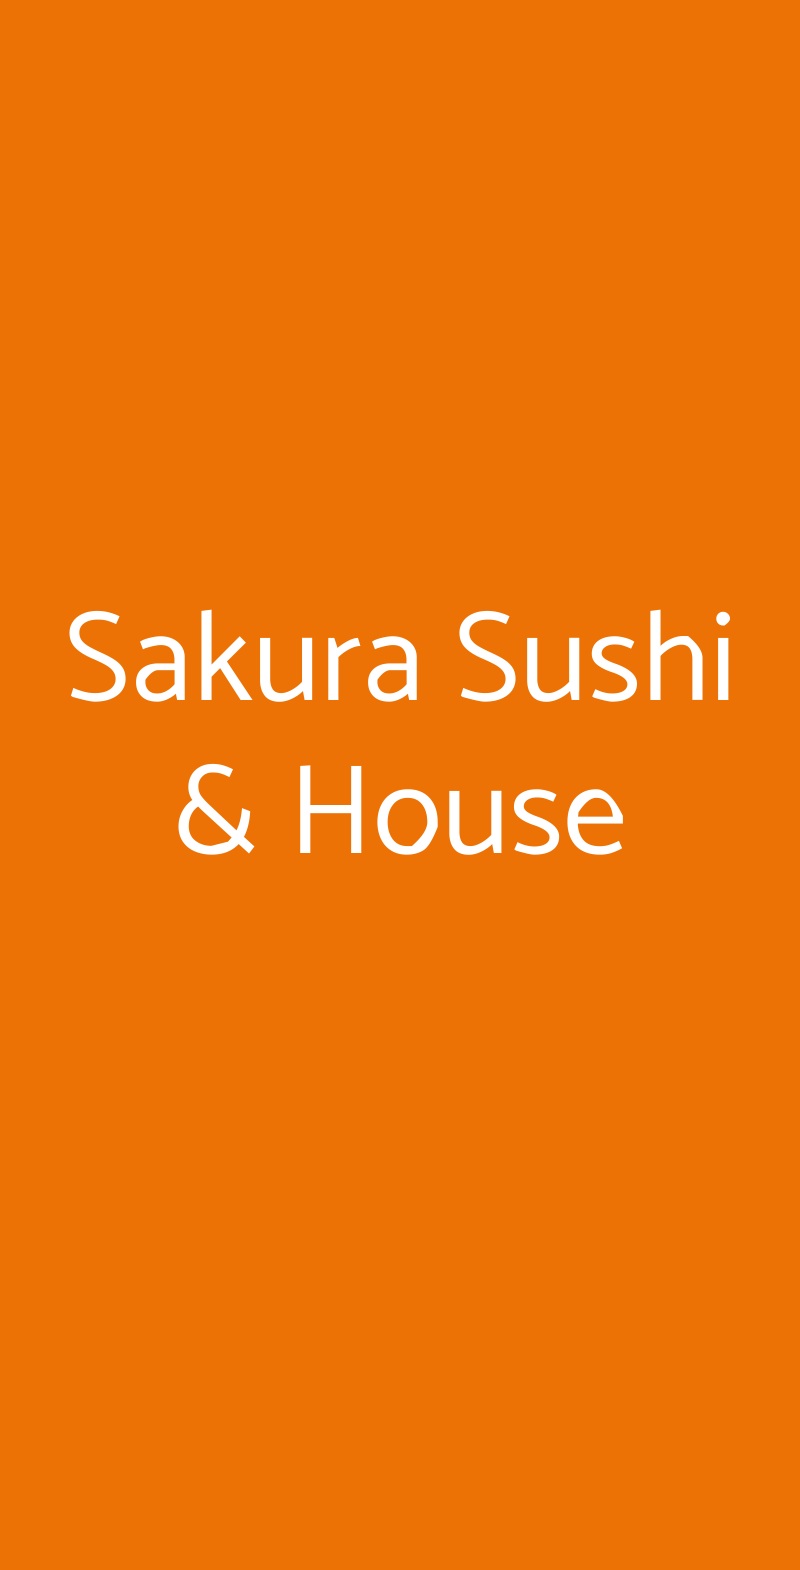 Sakura Sushi & House Milano menù 1 pagina